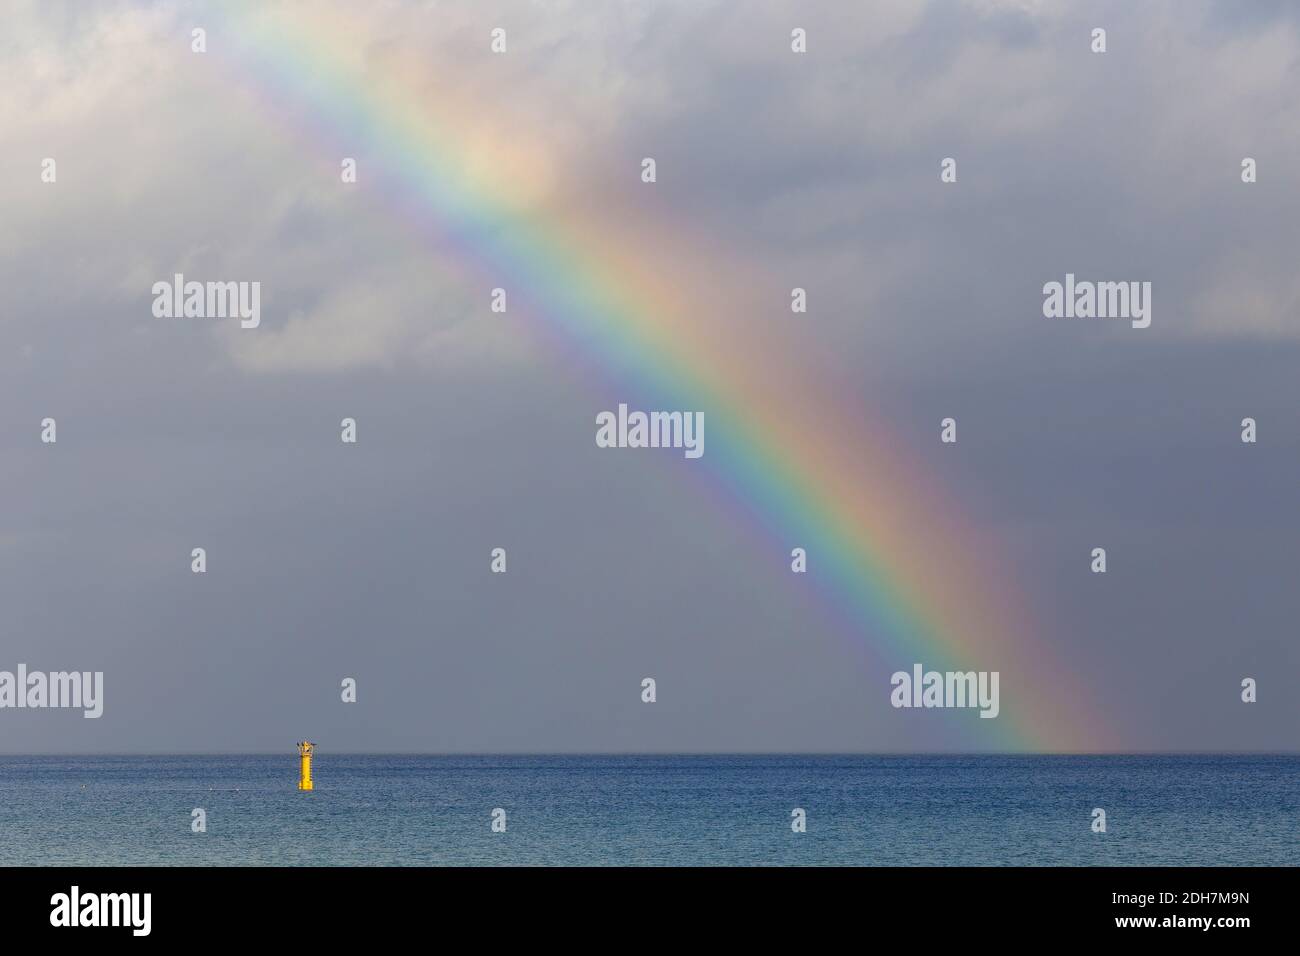 Colorful rainbow over the sea, horizontal Stock Photo